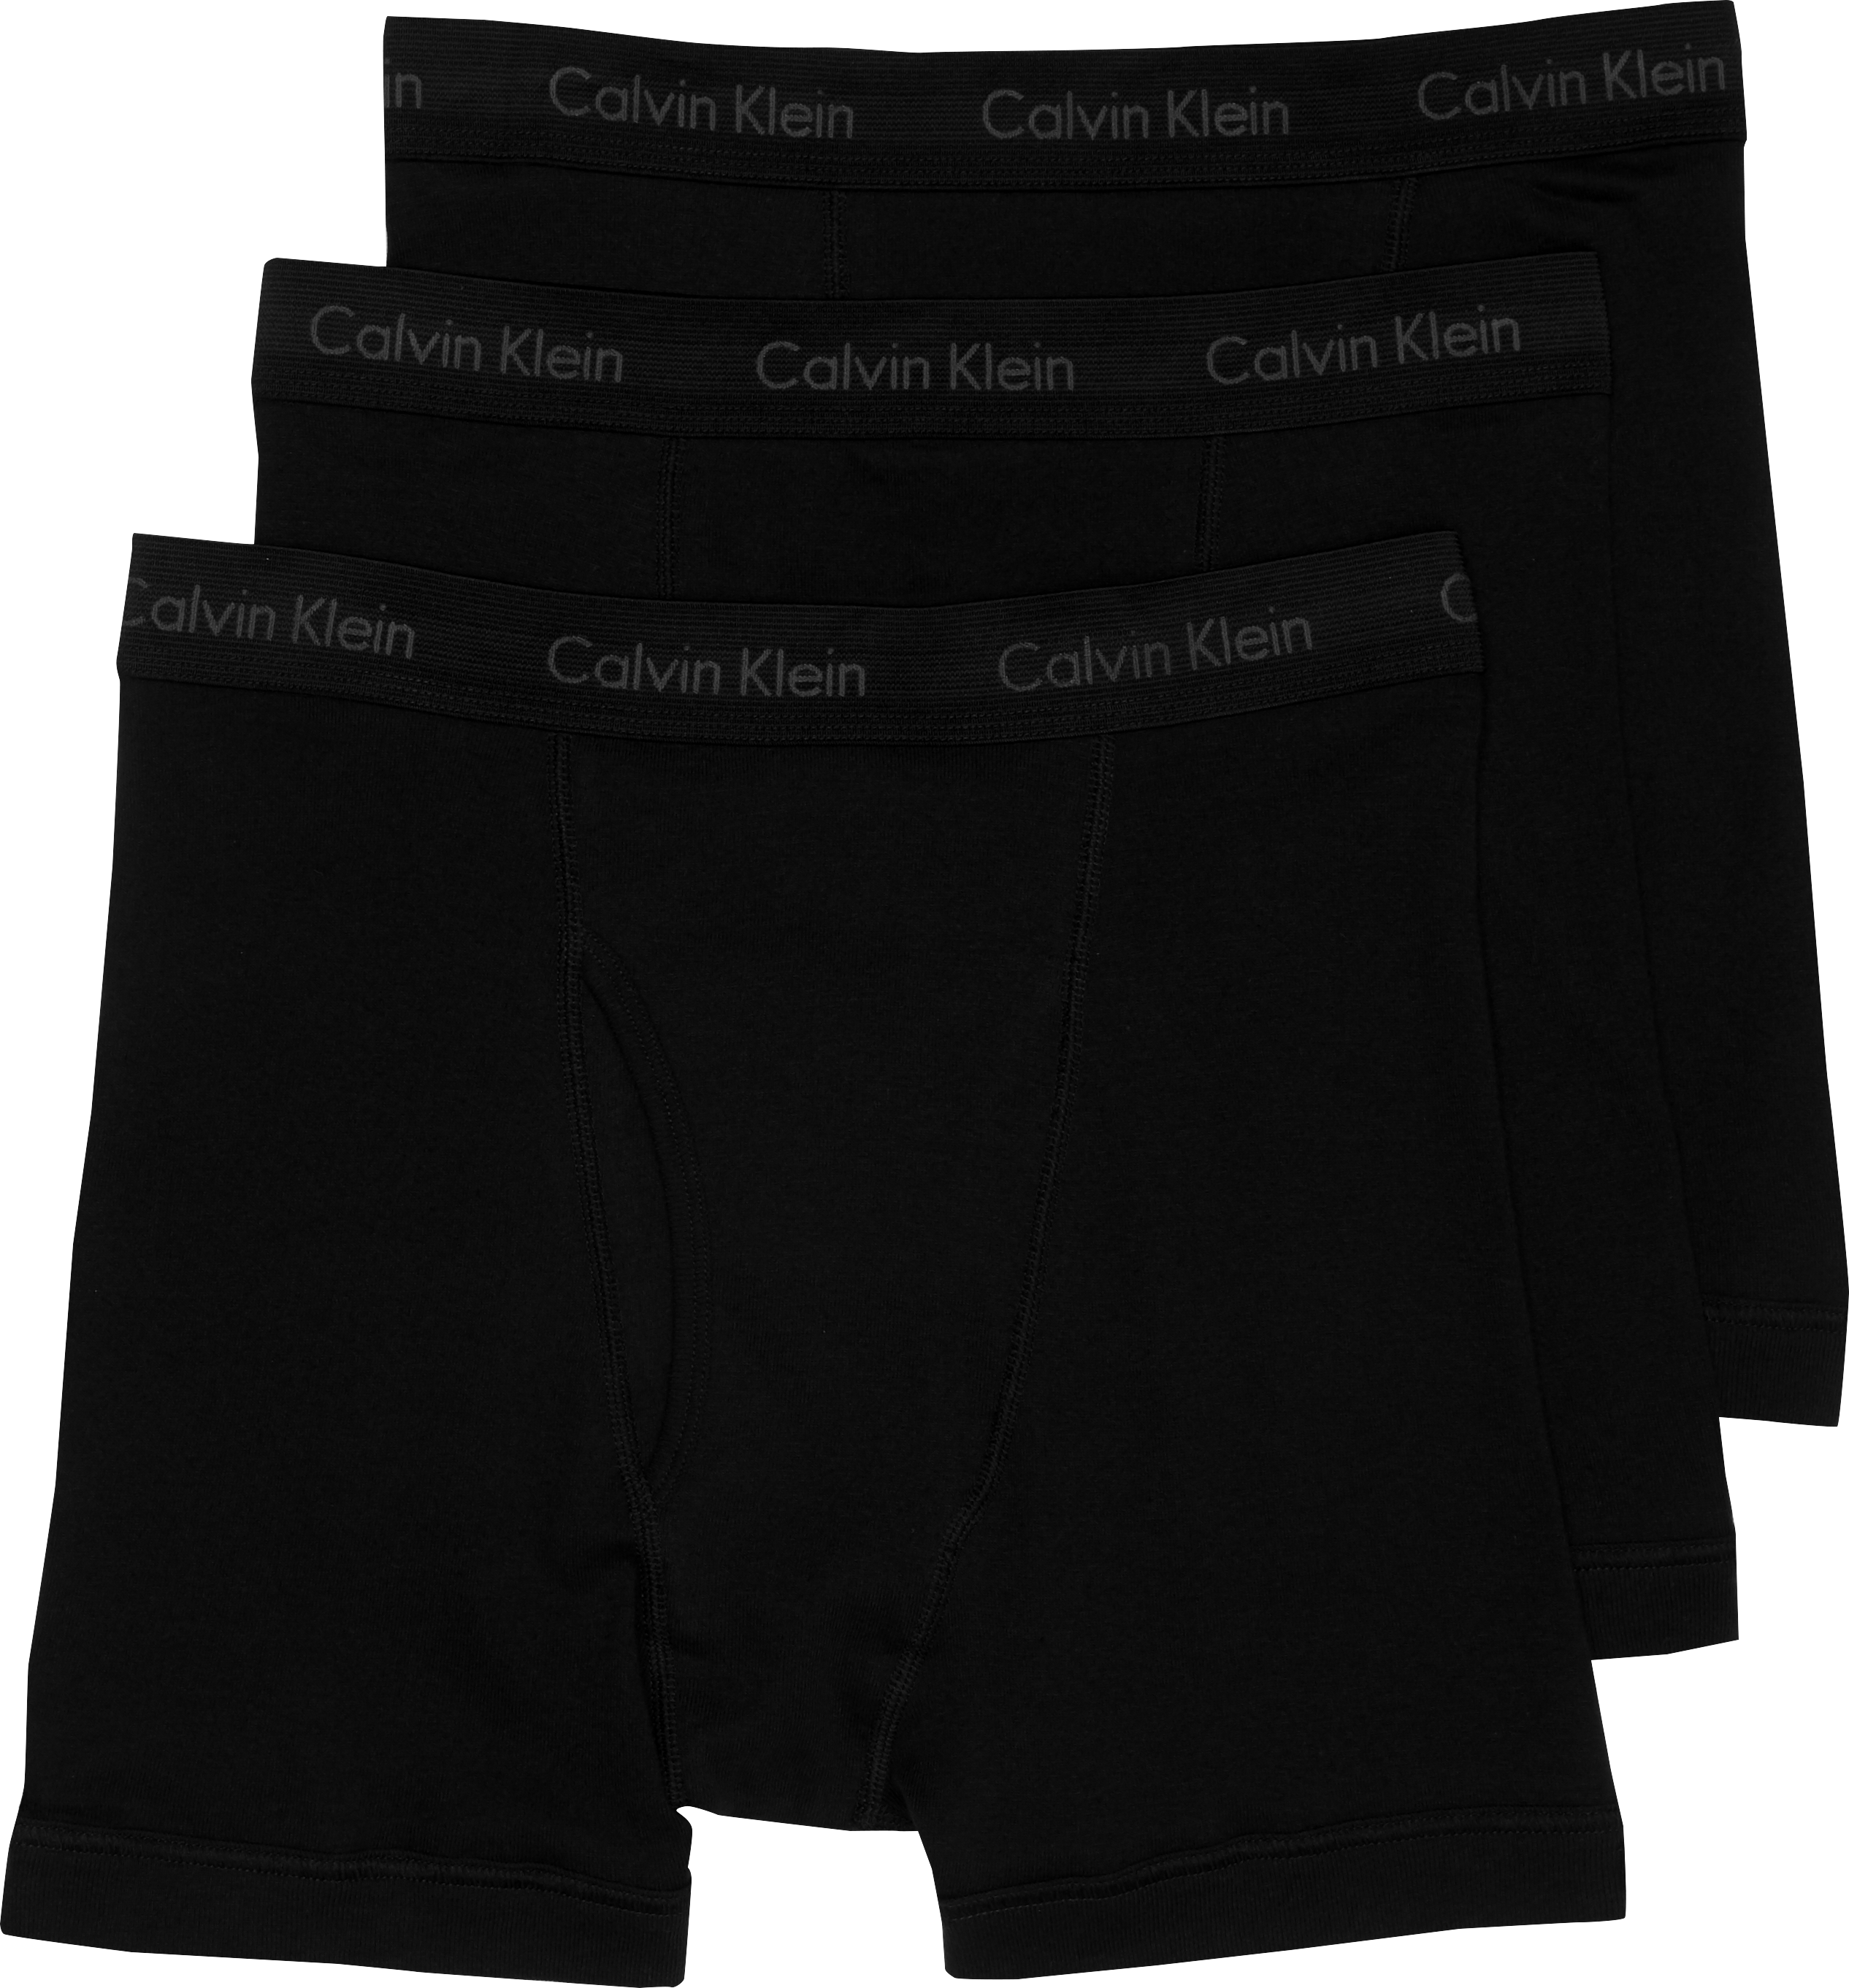 calvin klein 3 pack black